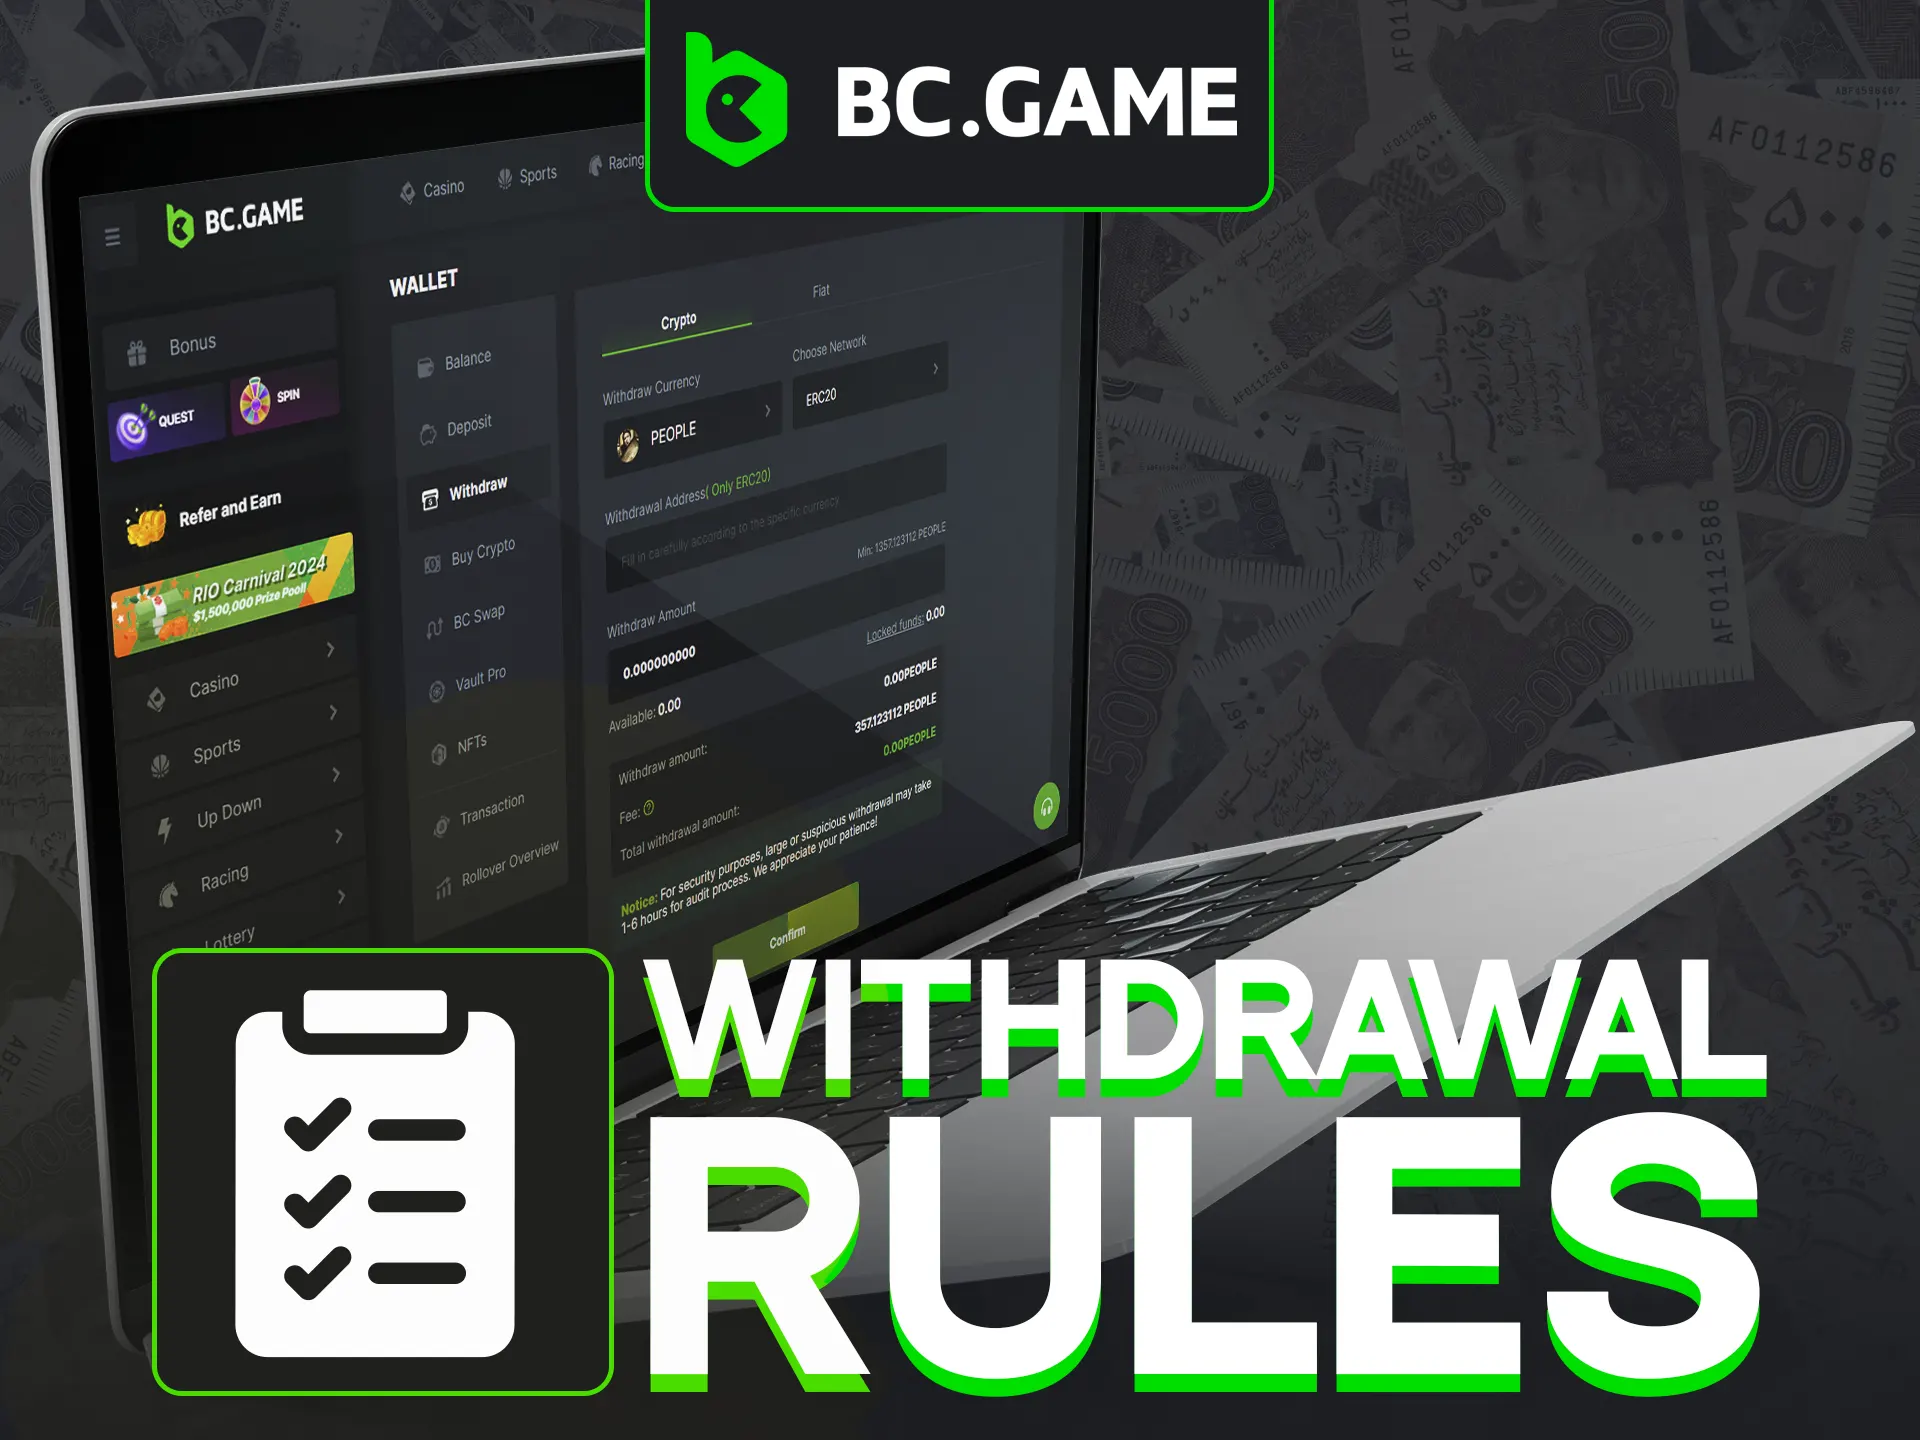 Follow withdrawal rules at BC Game casino.